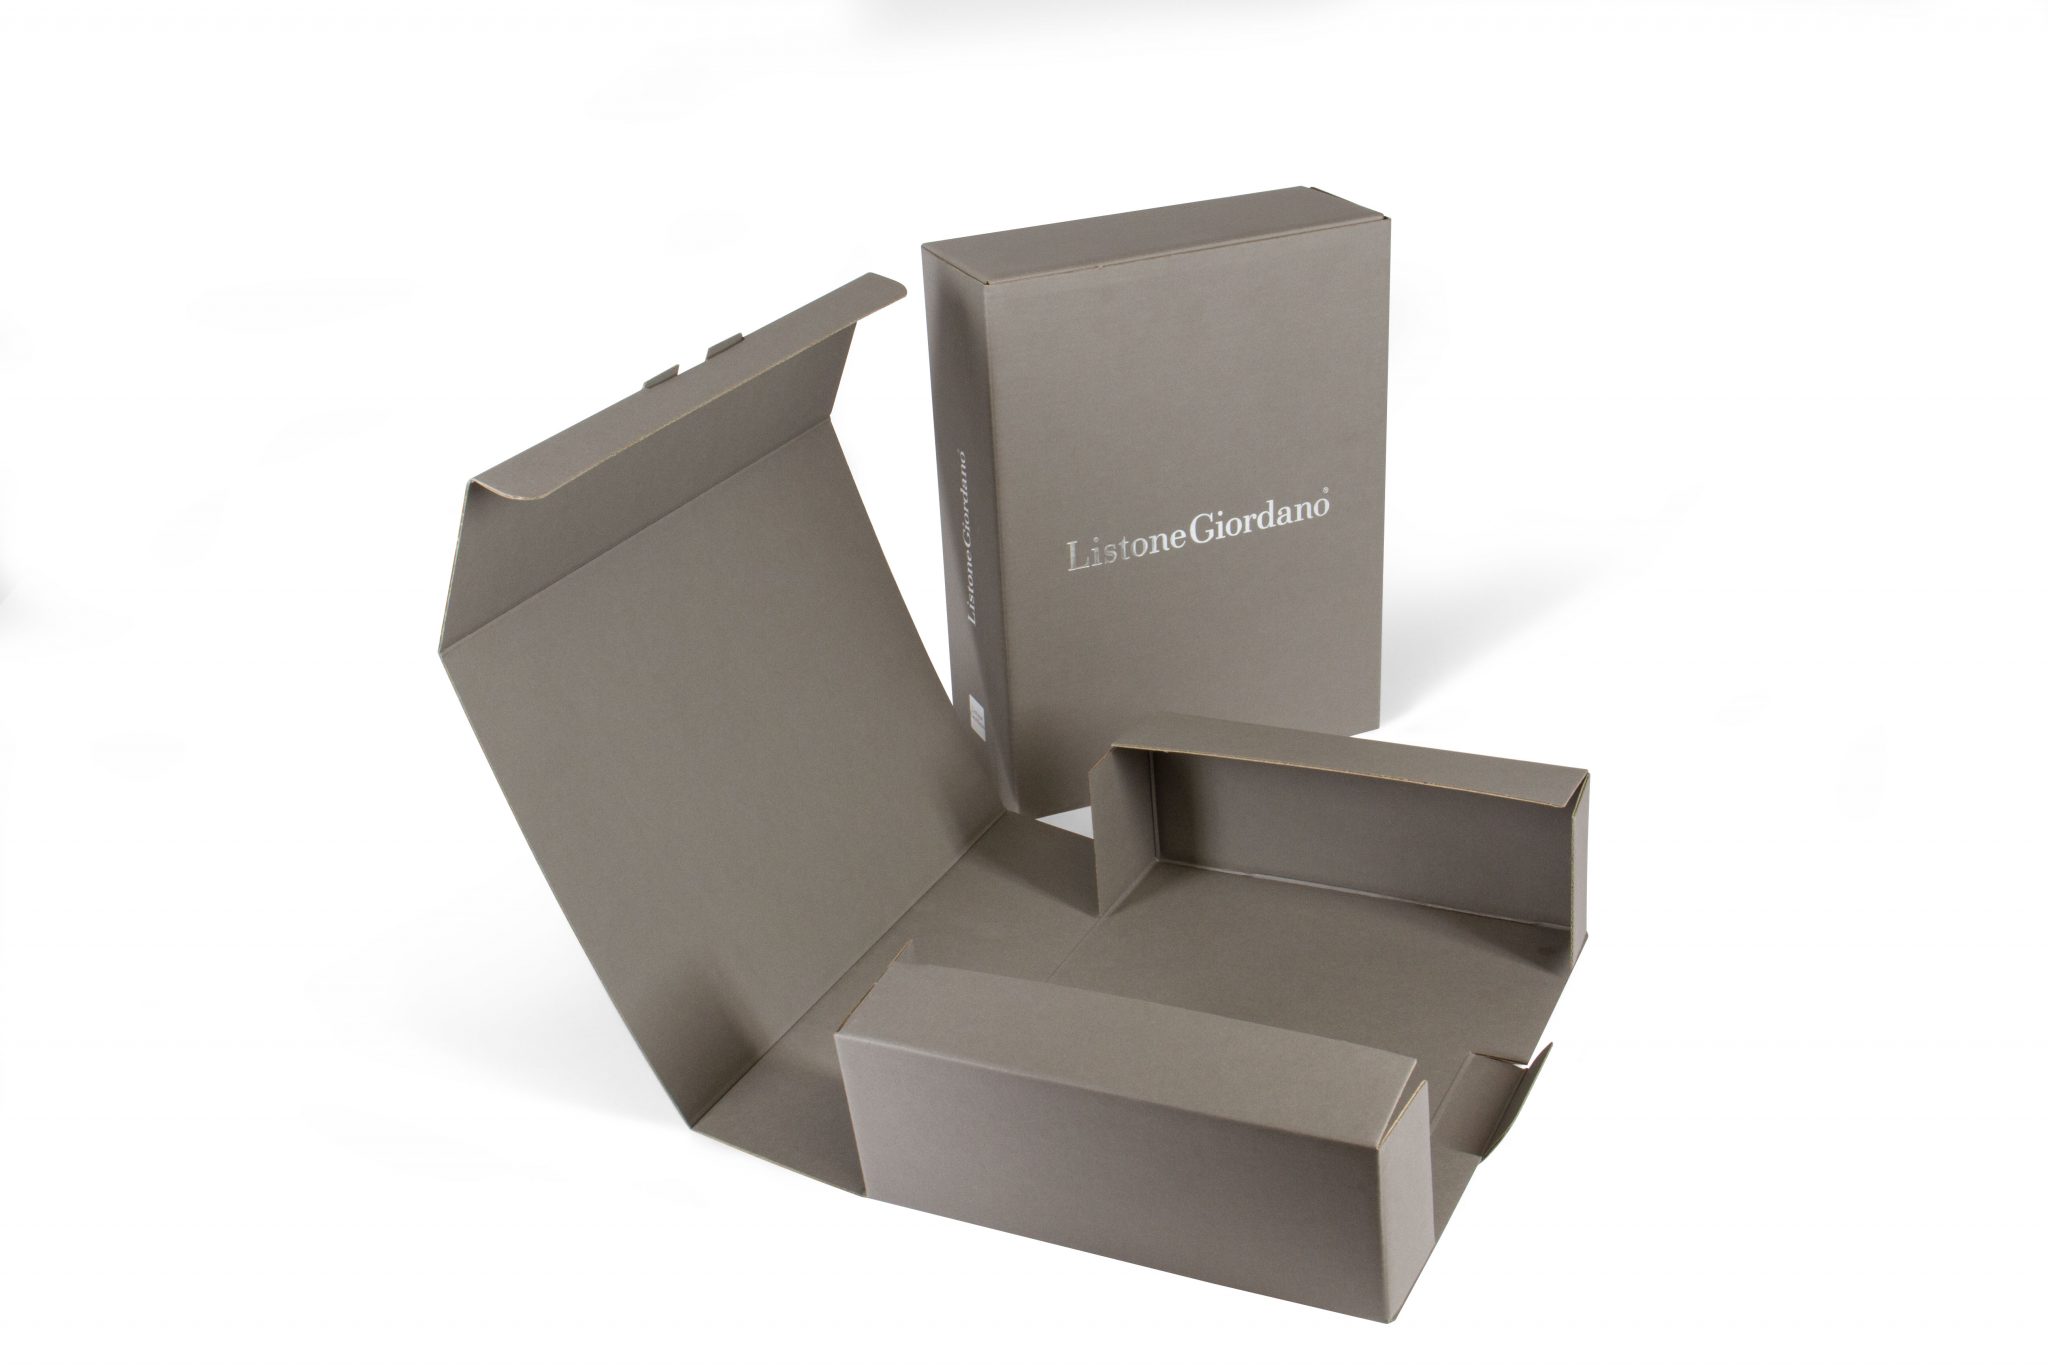 Self-mounting box coupled with Fedrigoni Sirio Pietra paper customized with hot print